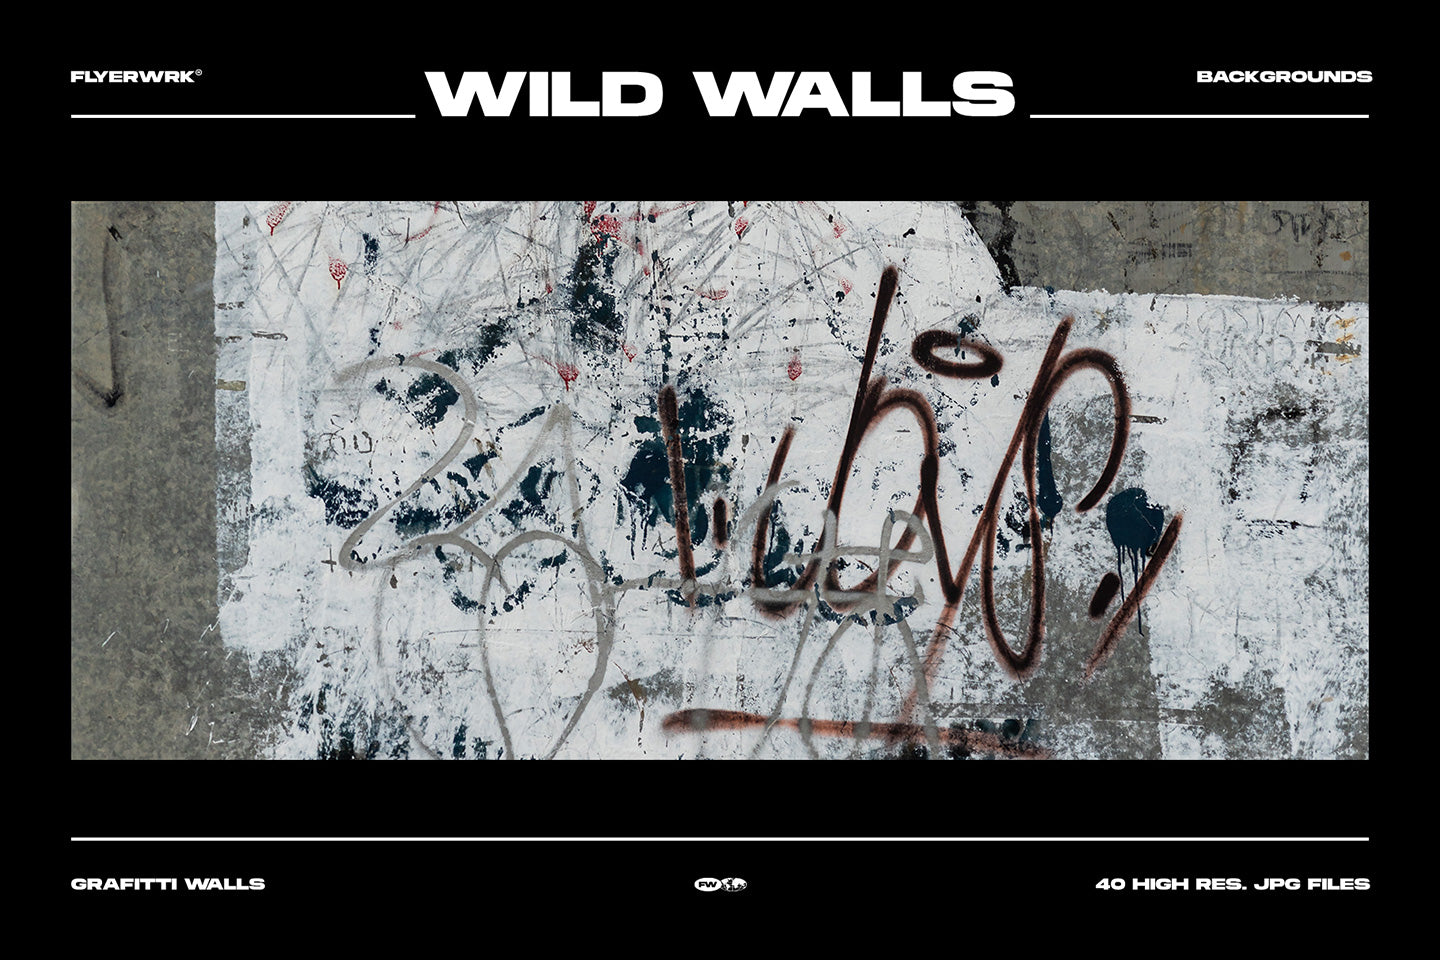 Wild Walls